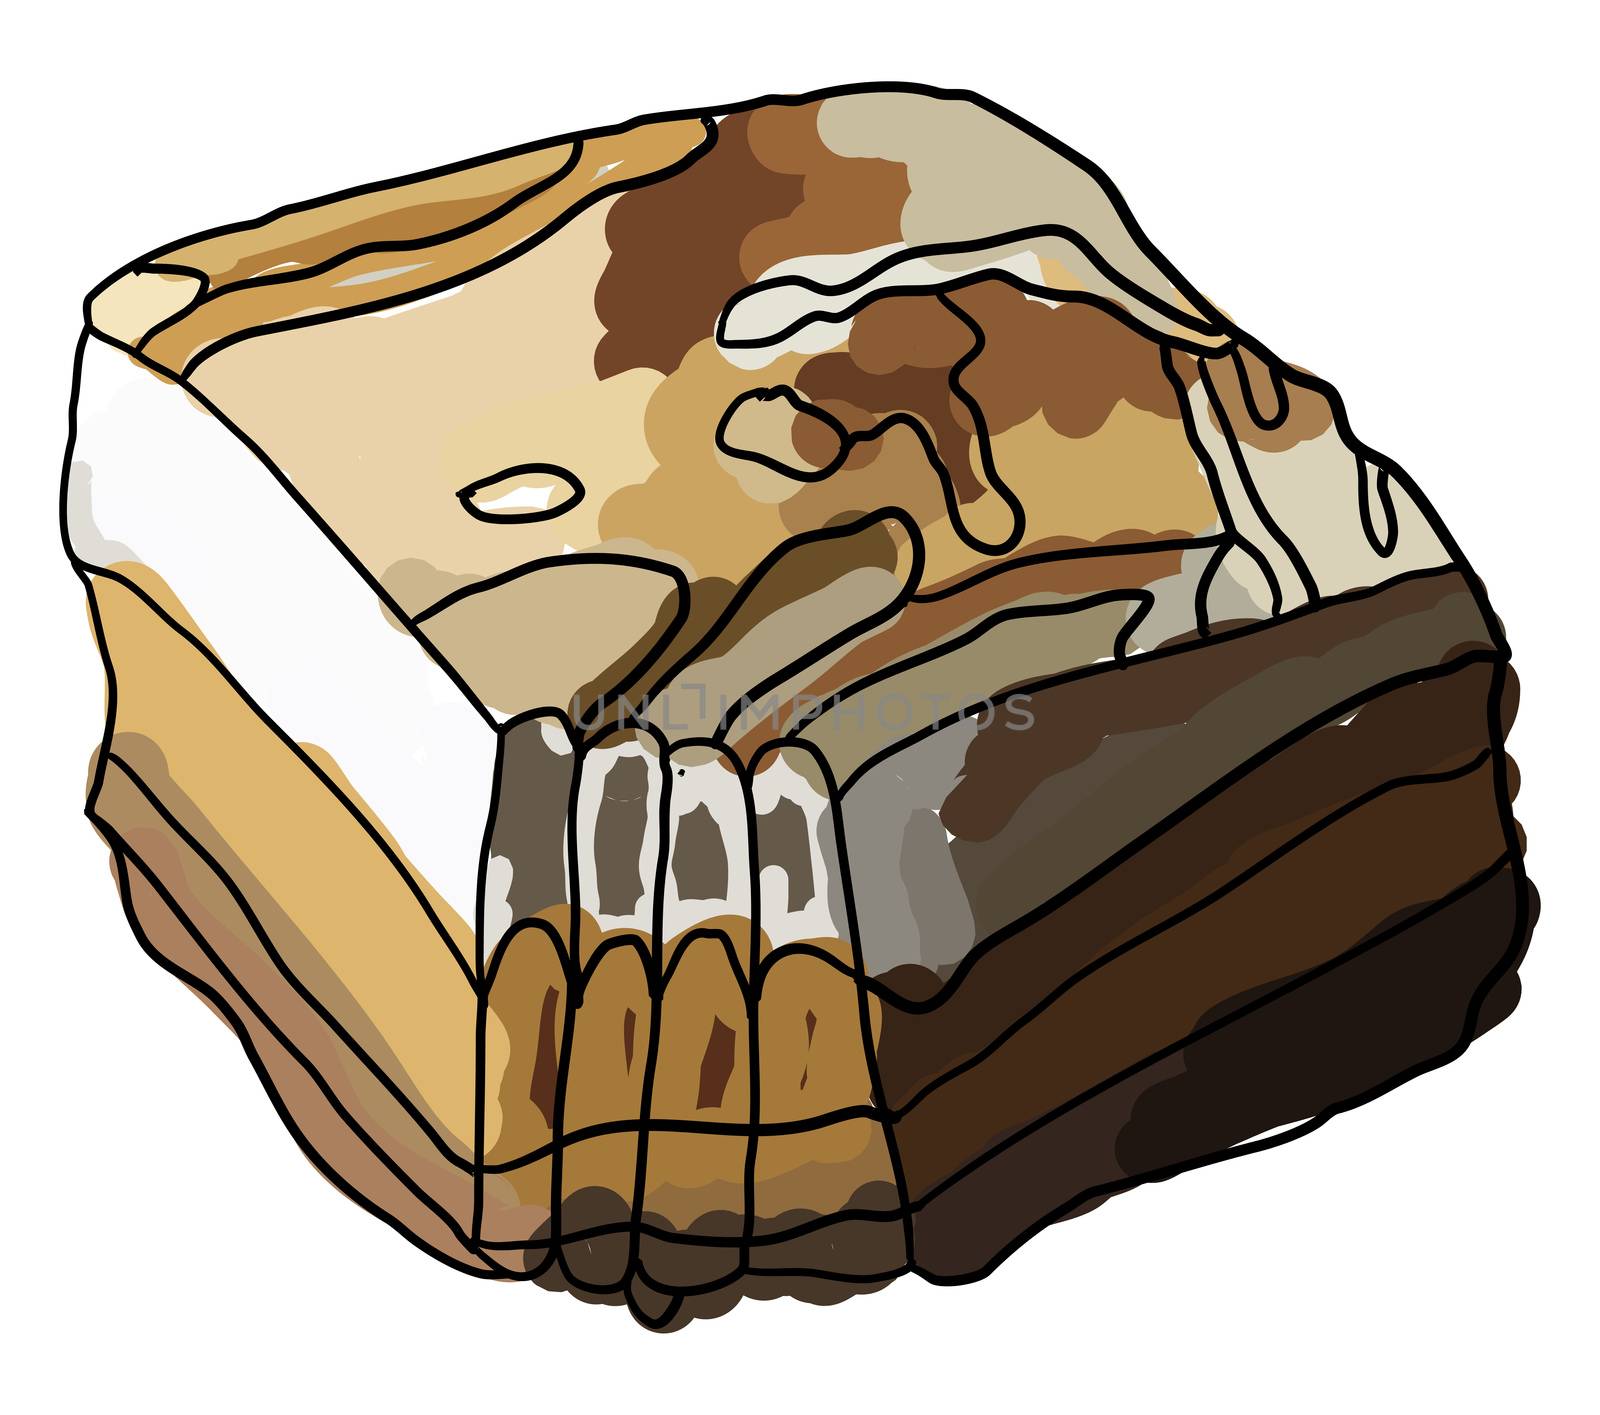 Sweet potato pie, illustration, vector on white background